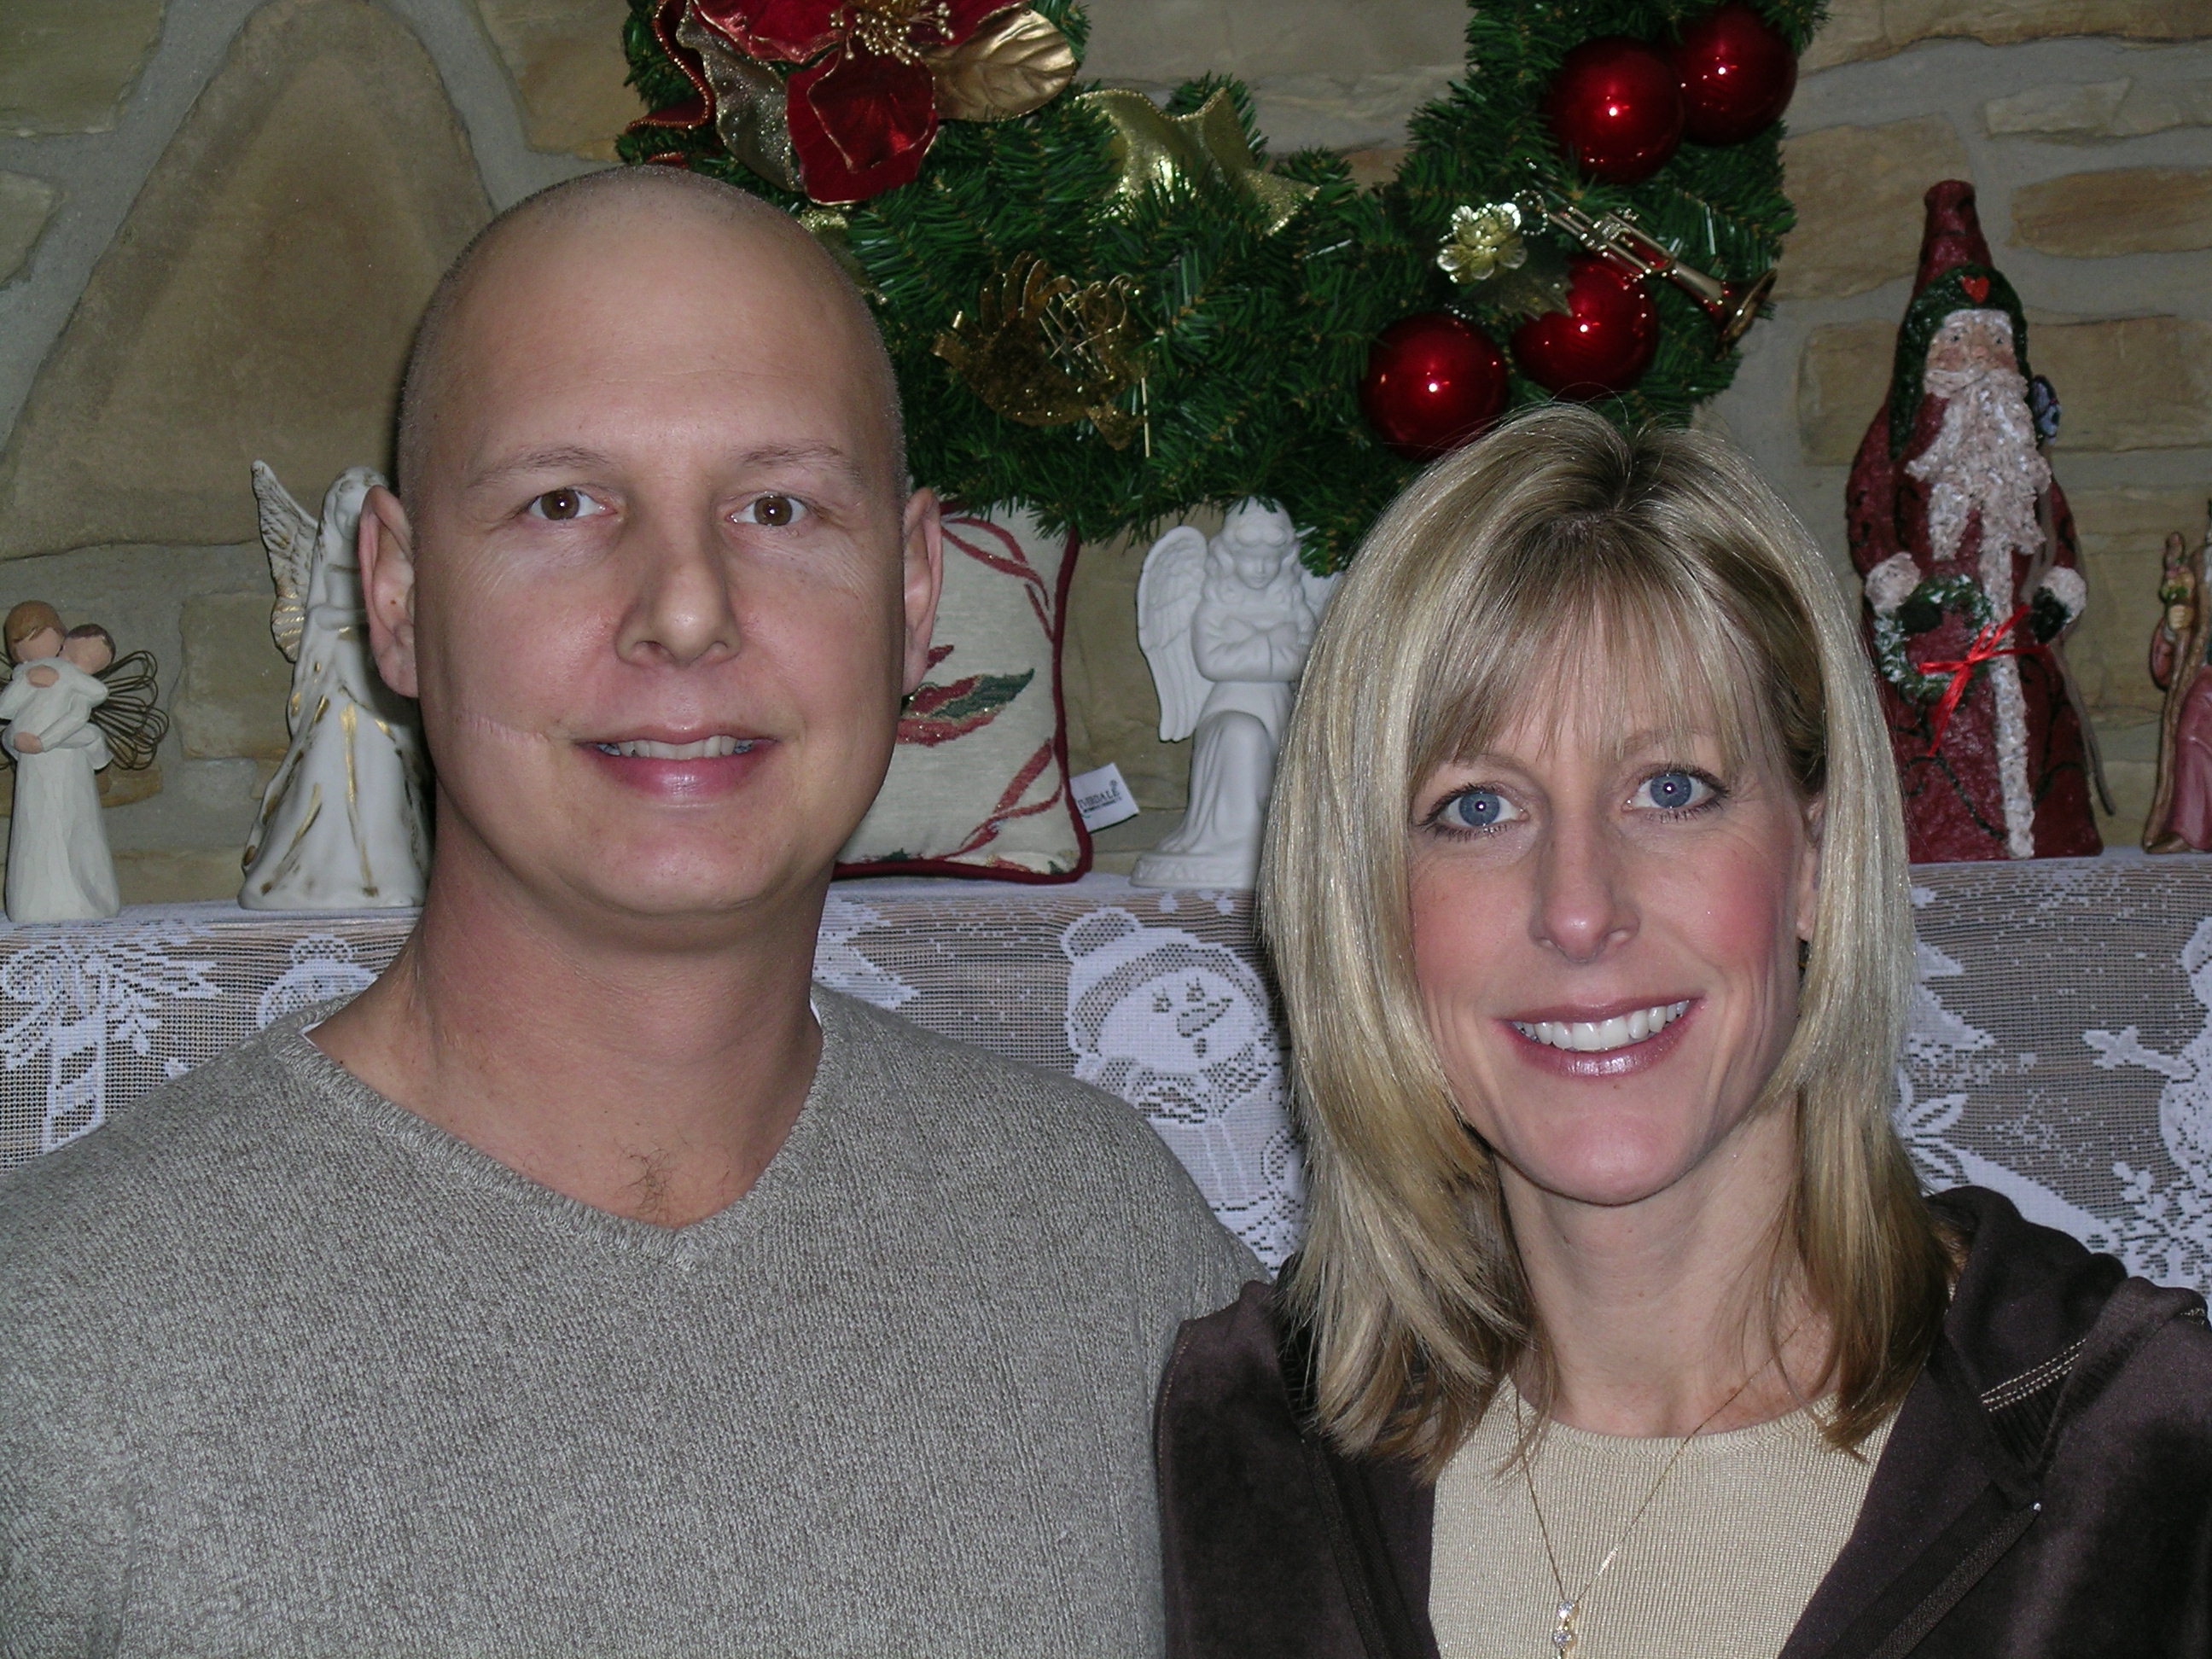 Jamie battled cancer beginning in November 2003